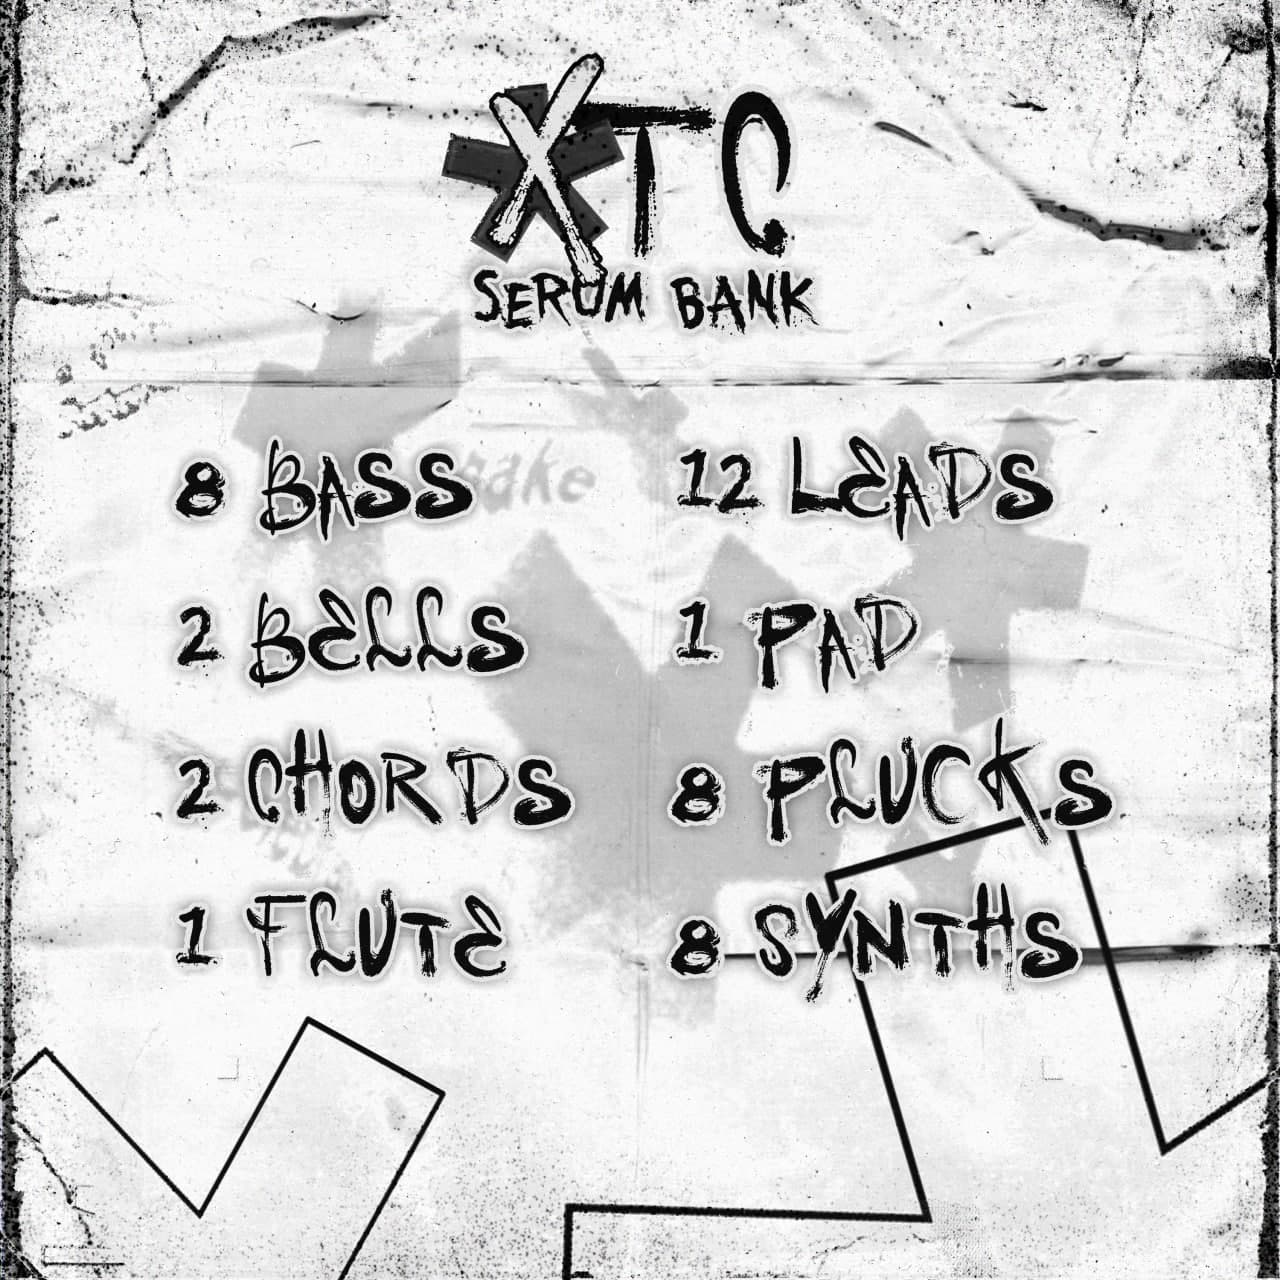 XTC SERUM BANK